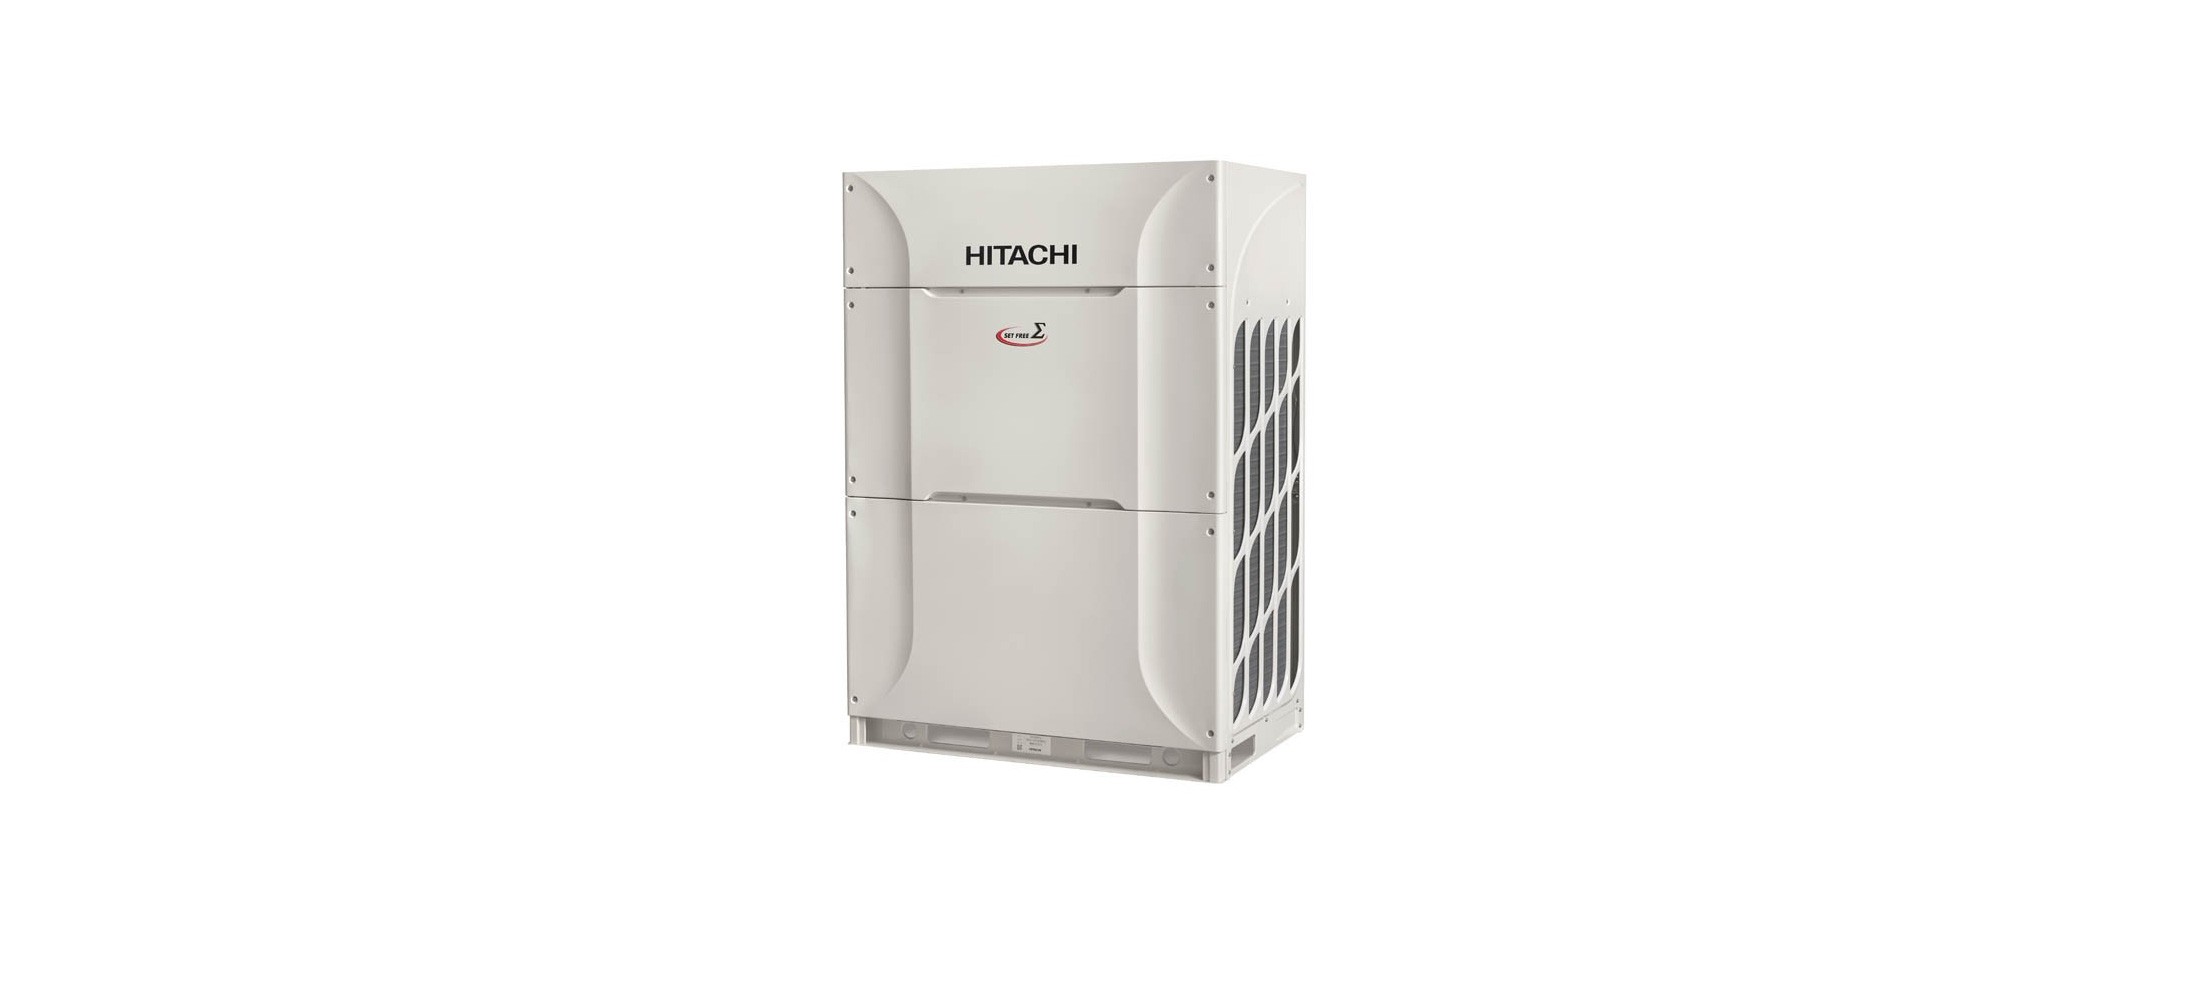 Set Free Sigma de chez Hitachi Cooling & Heating